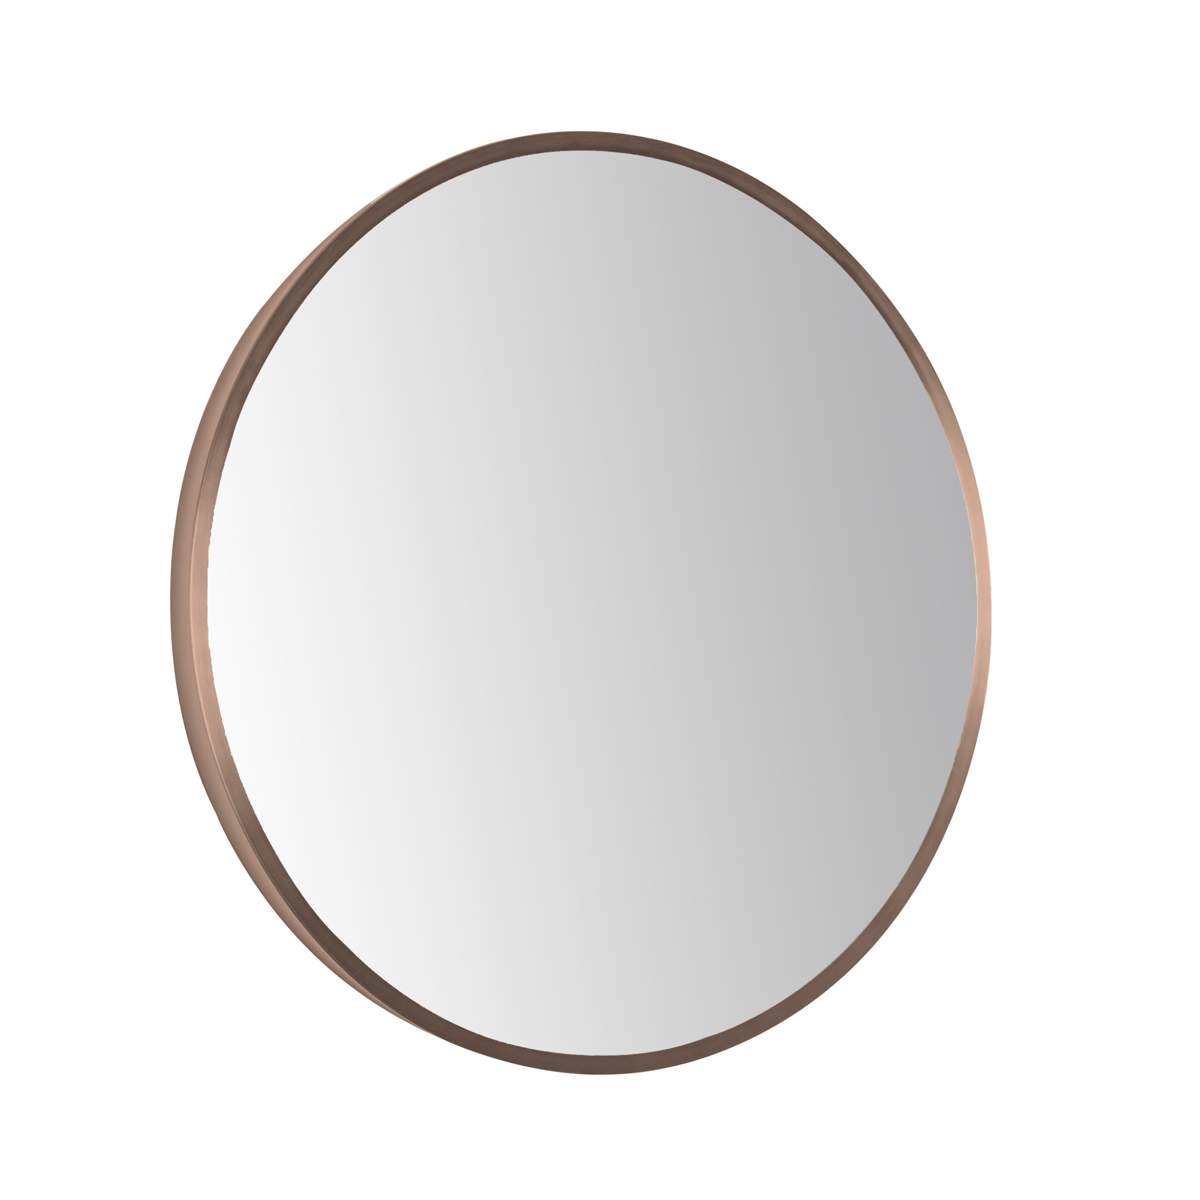 JTP Vos Brushed Bronze Mirror without Light (21M60WLBRZ)